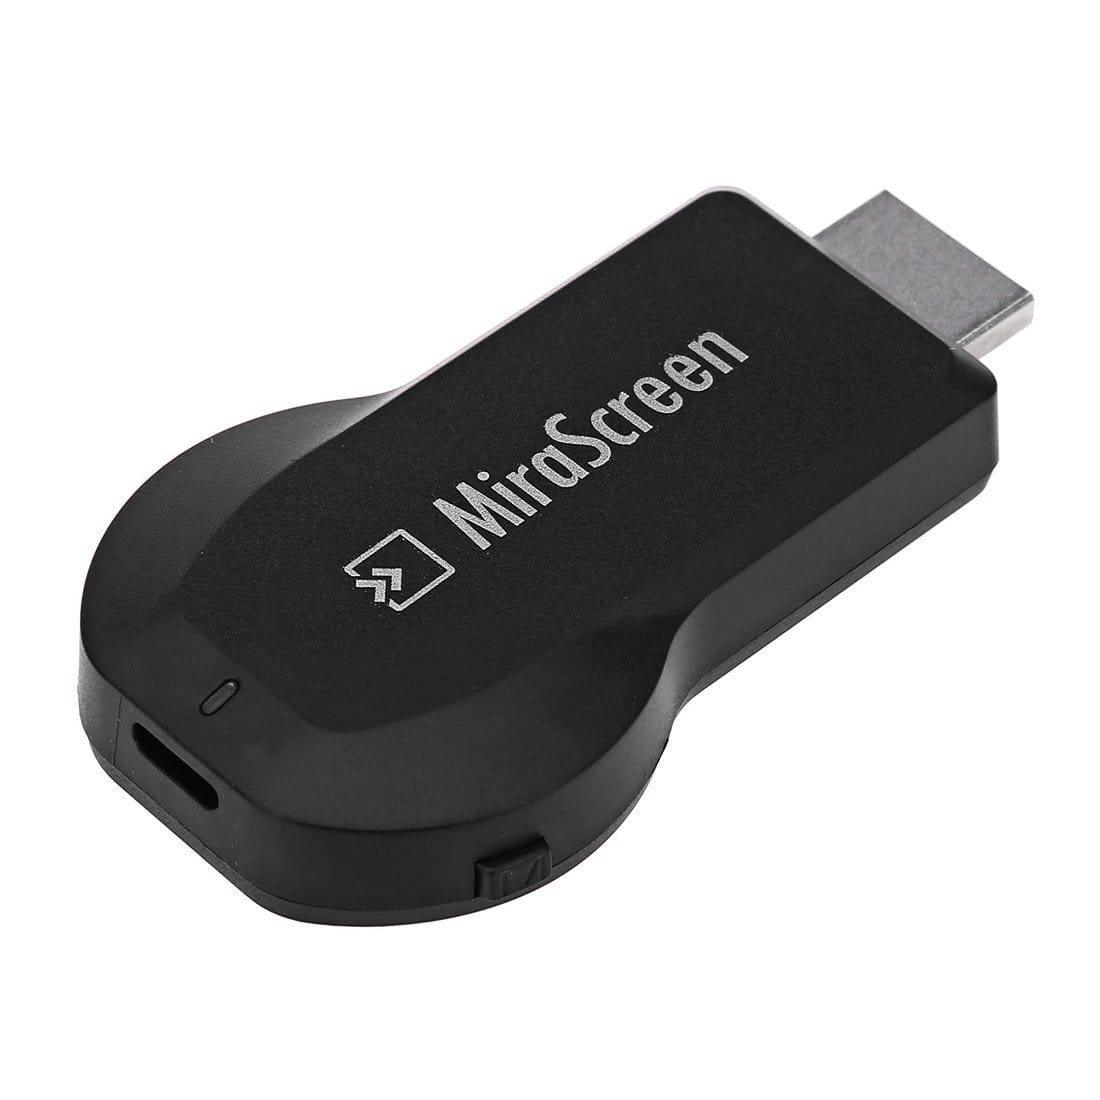 MiraScreen Wireless WiFi Display Dongle 1080P HDMI TV Stick Screen Mir